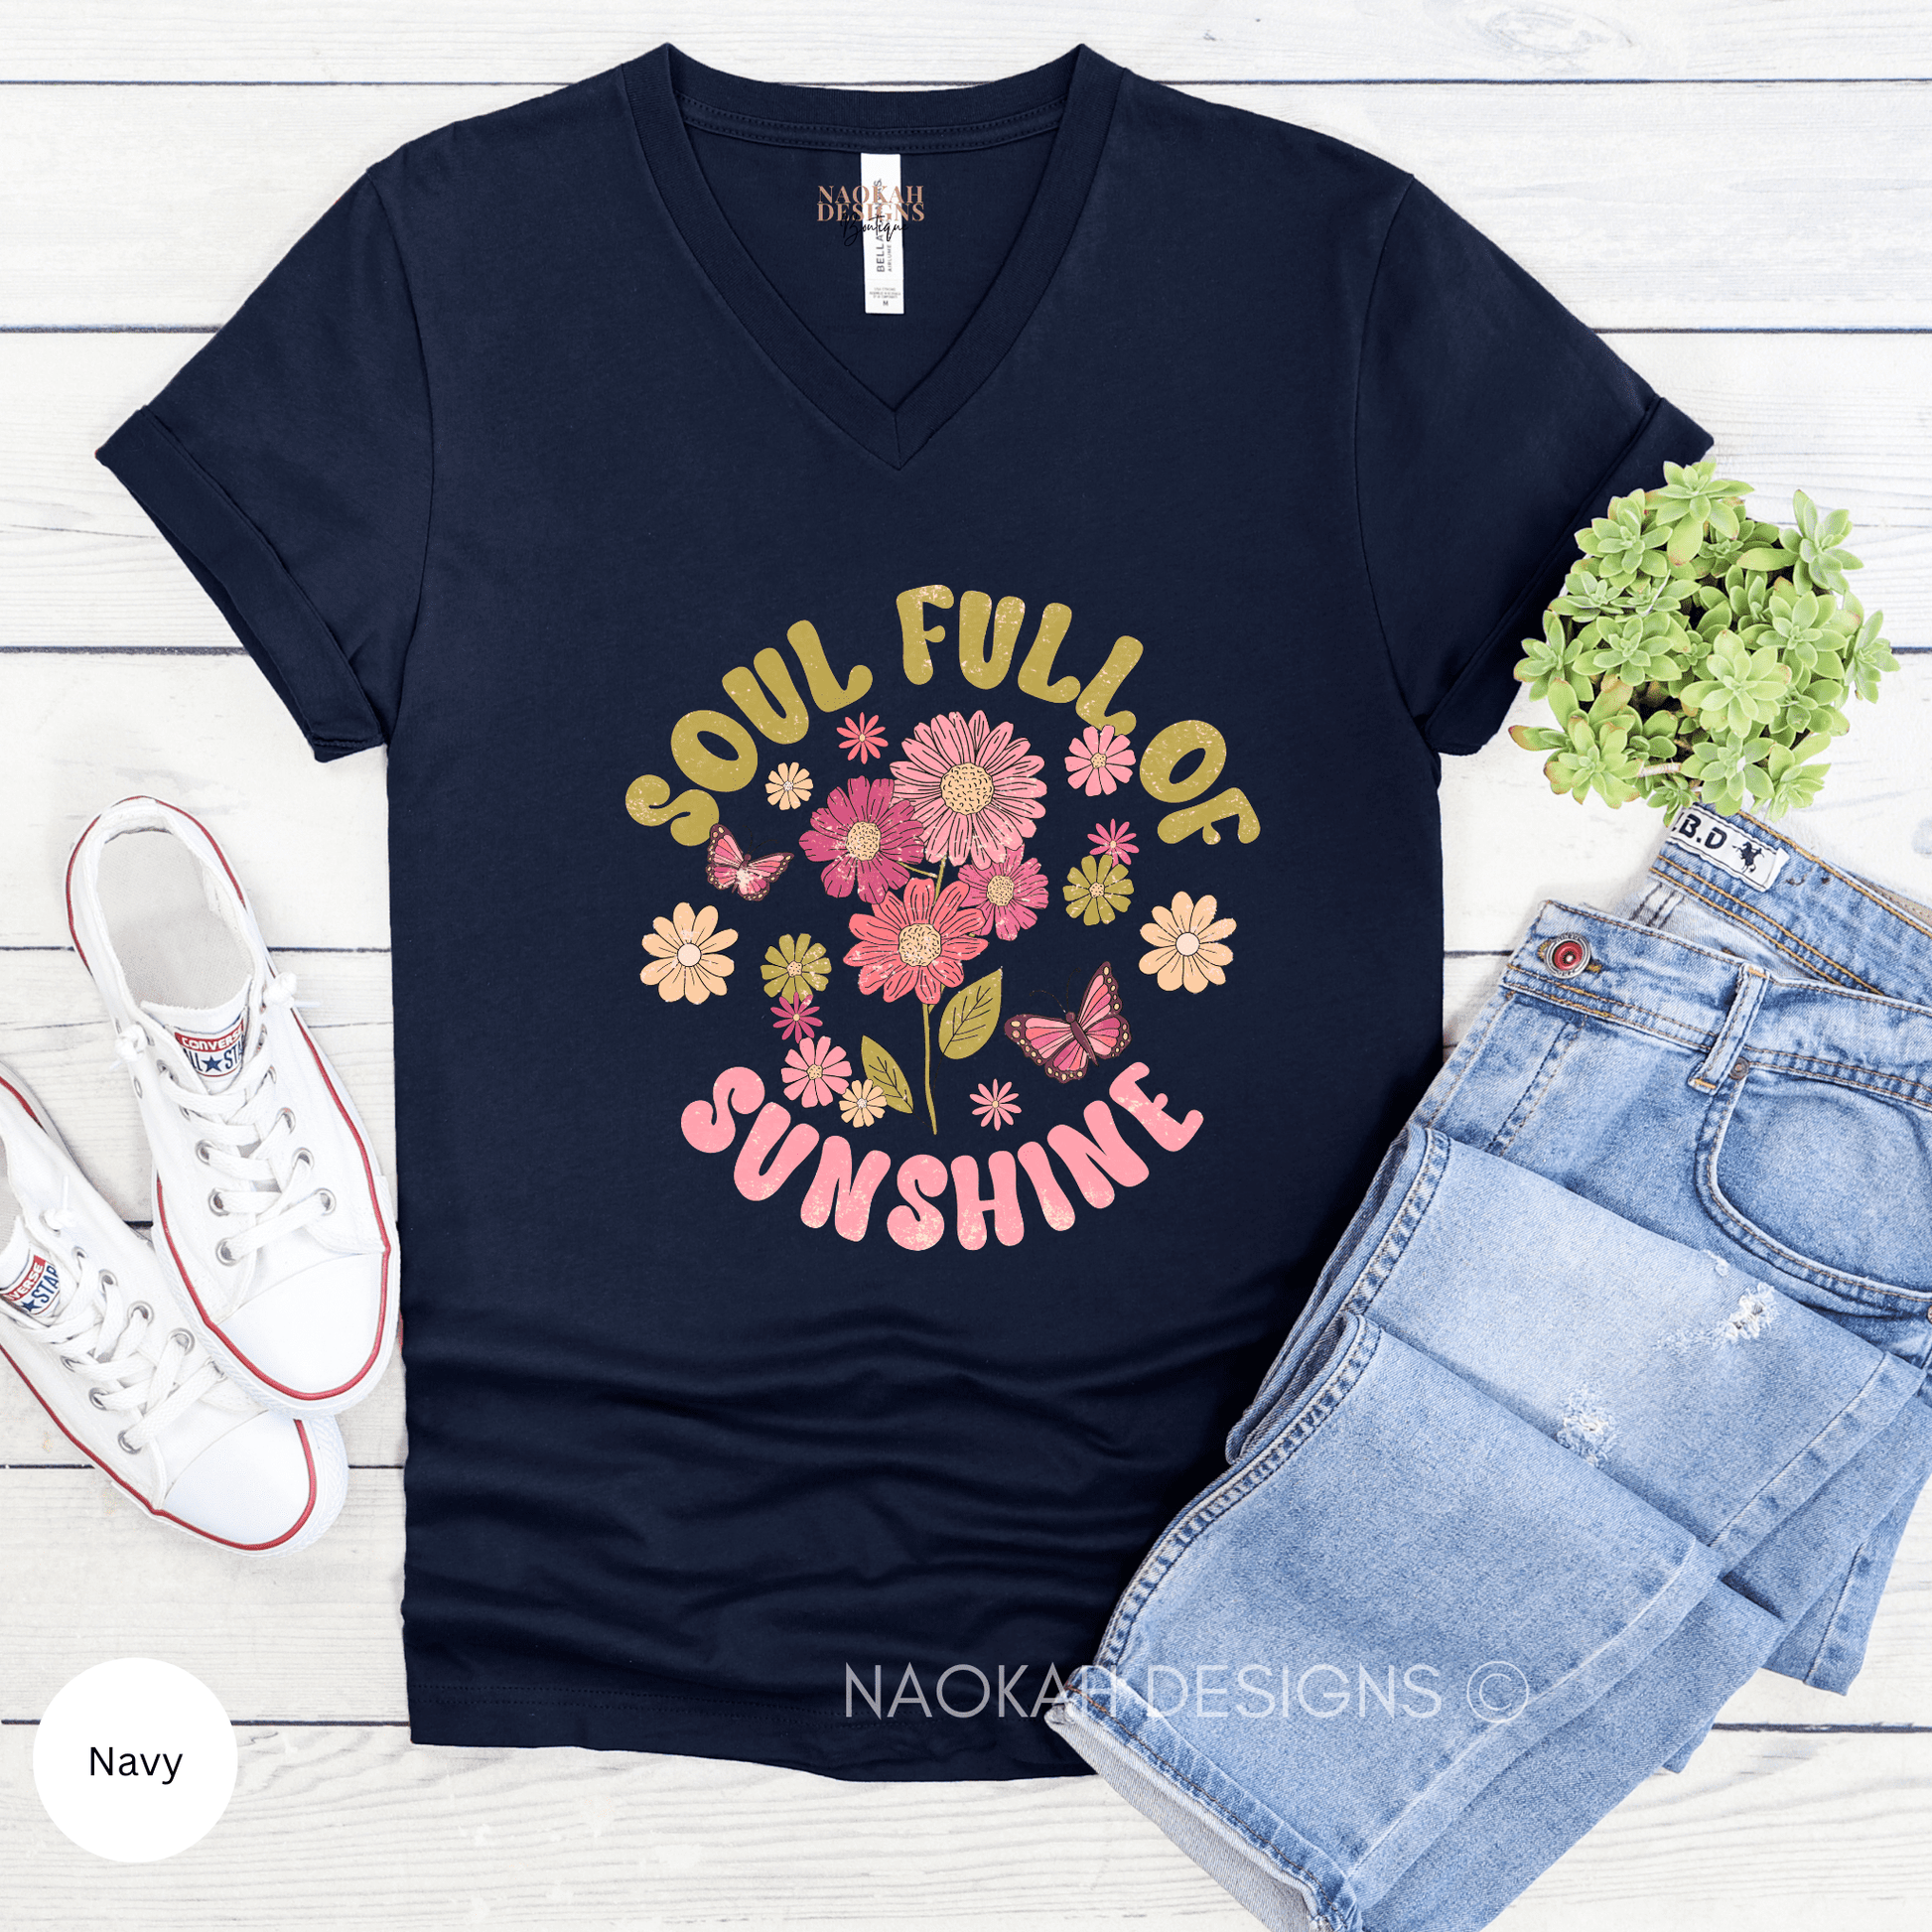 Soul Full Of Sunshine Shirt, Retro Sunshine Tee, Motivational Shirt, Summer Shirt, Self Love Shirt, Bohemian Apparel, Shirts with Sayings